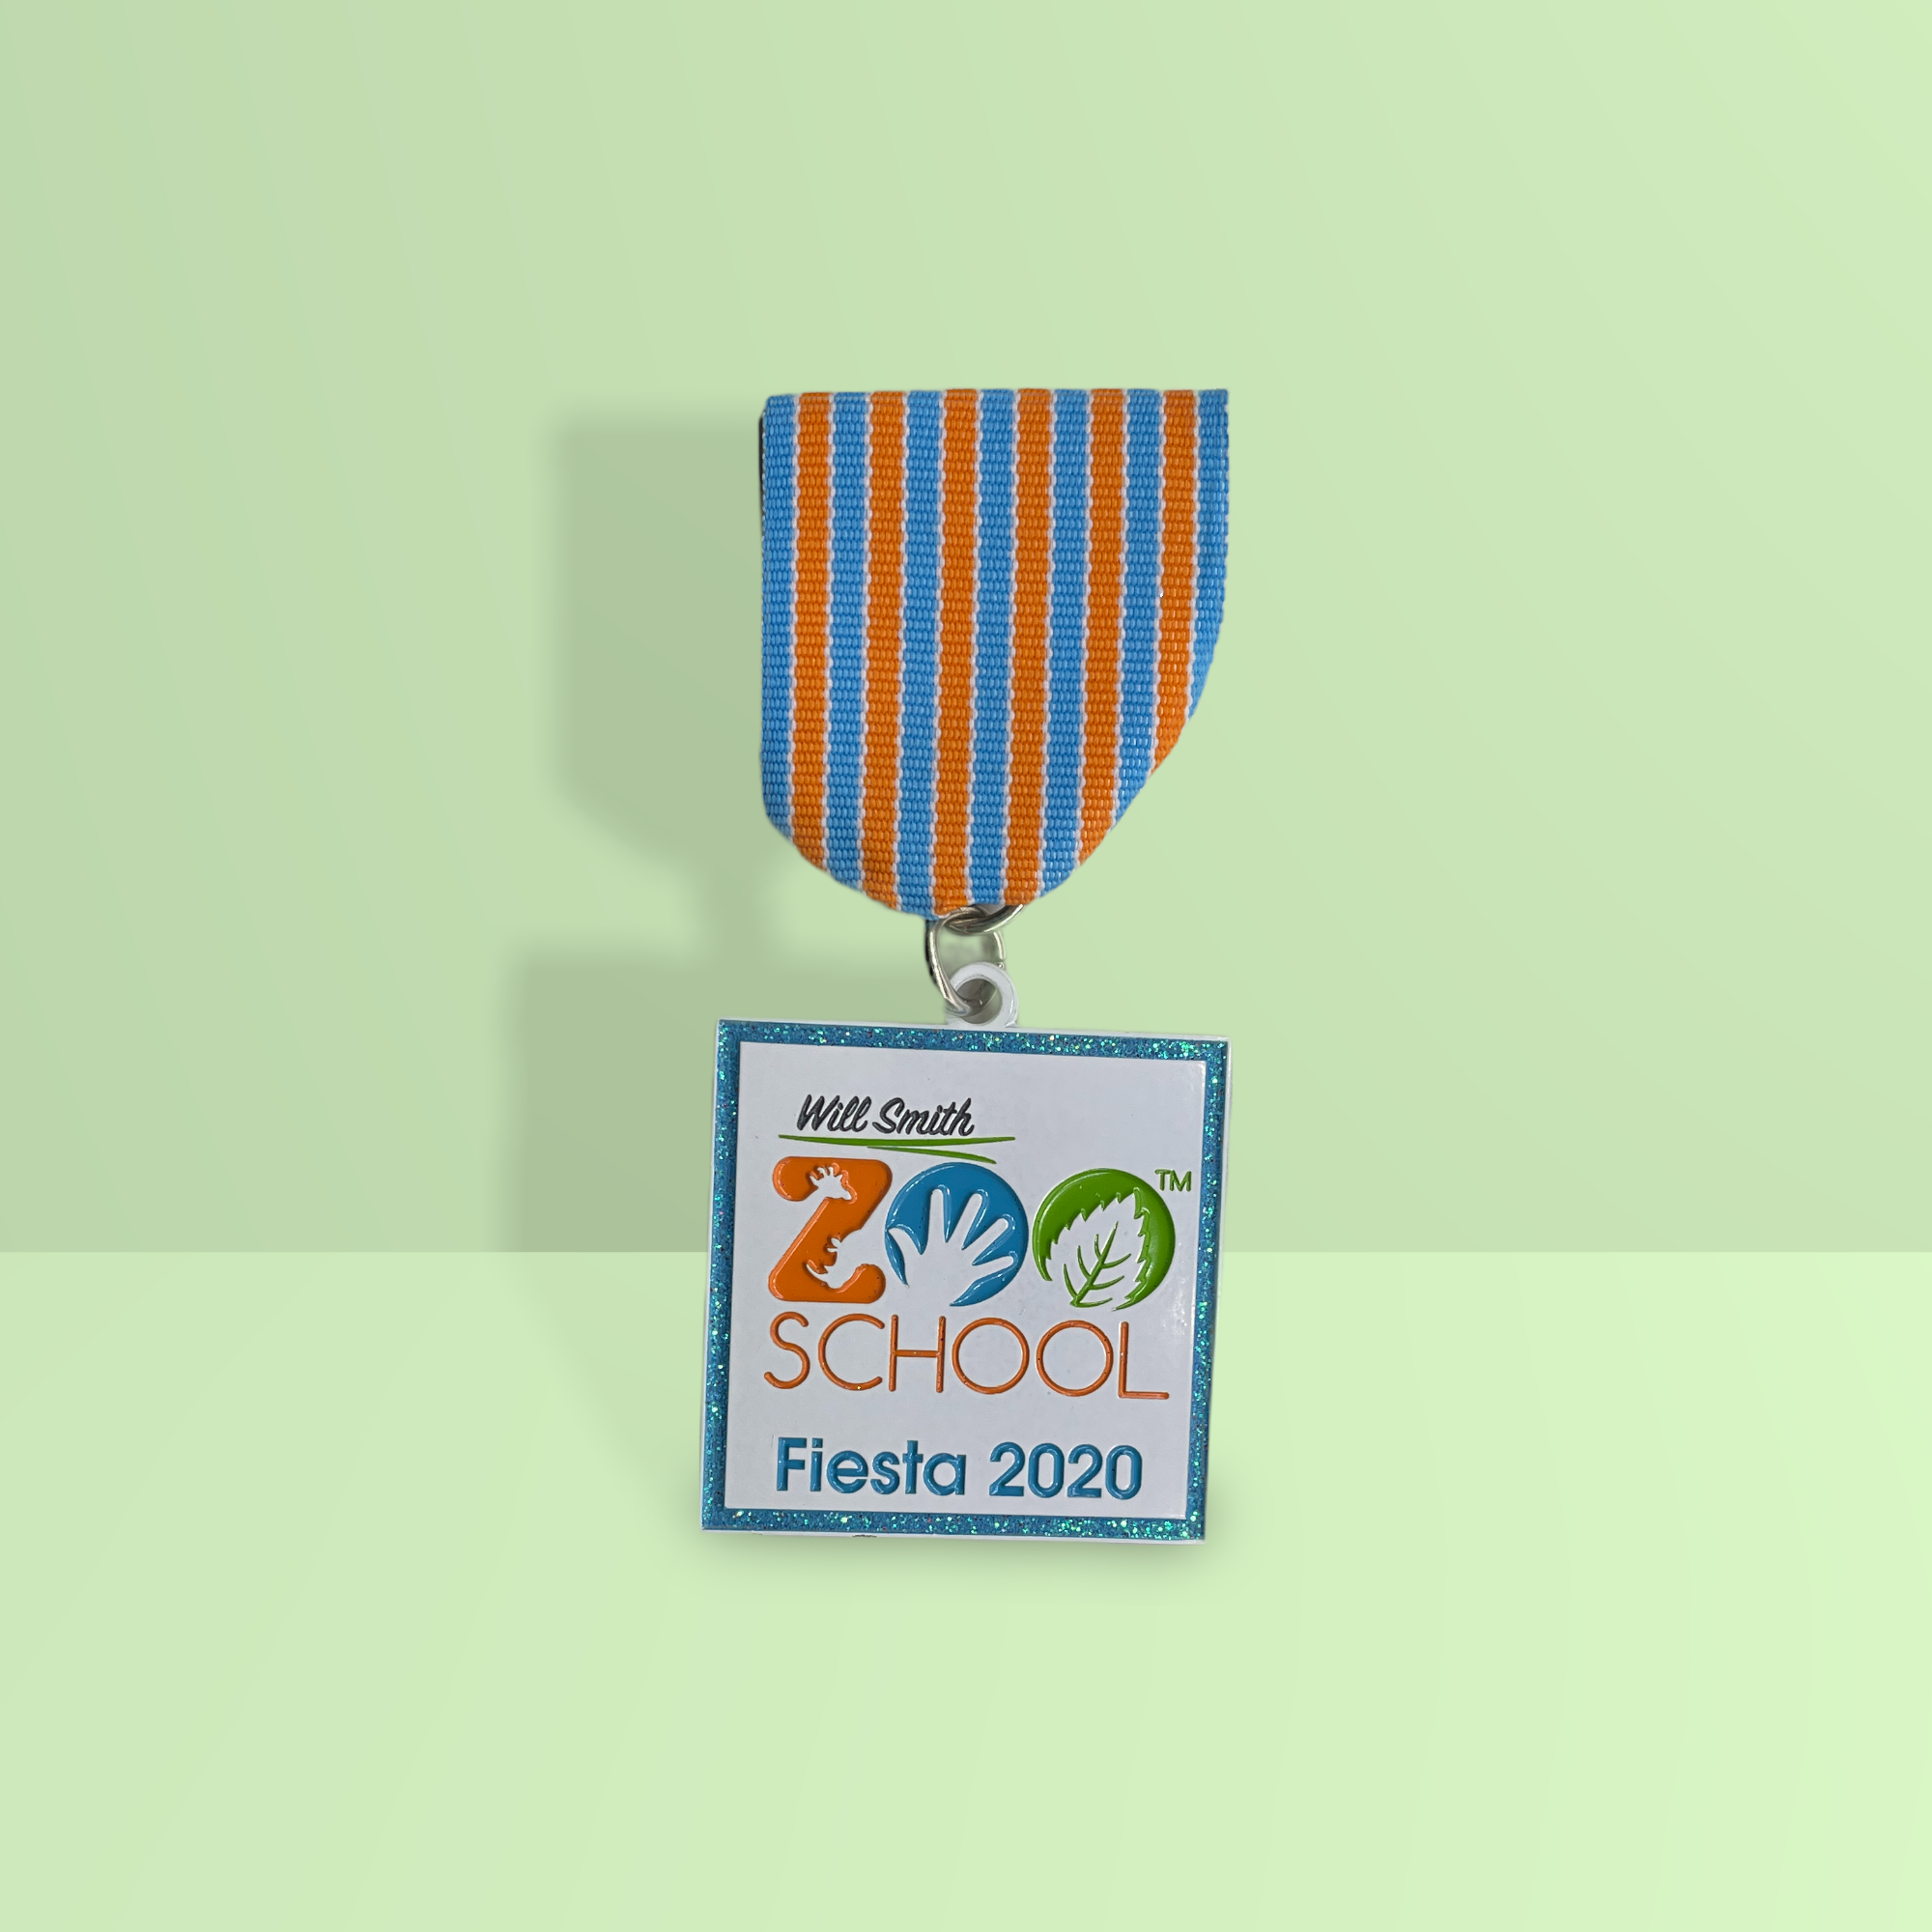 Spurs Jesus medal! 😱😱😱 - Fiesta Medal Maniacs